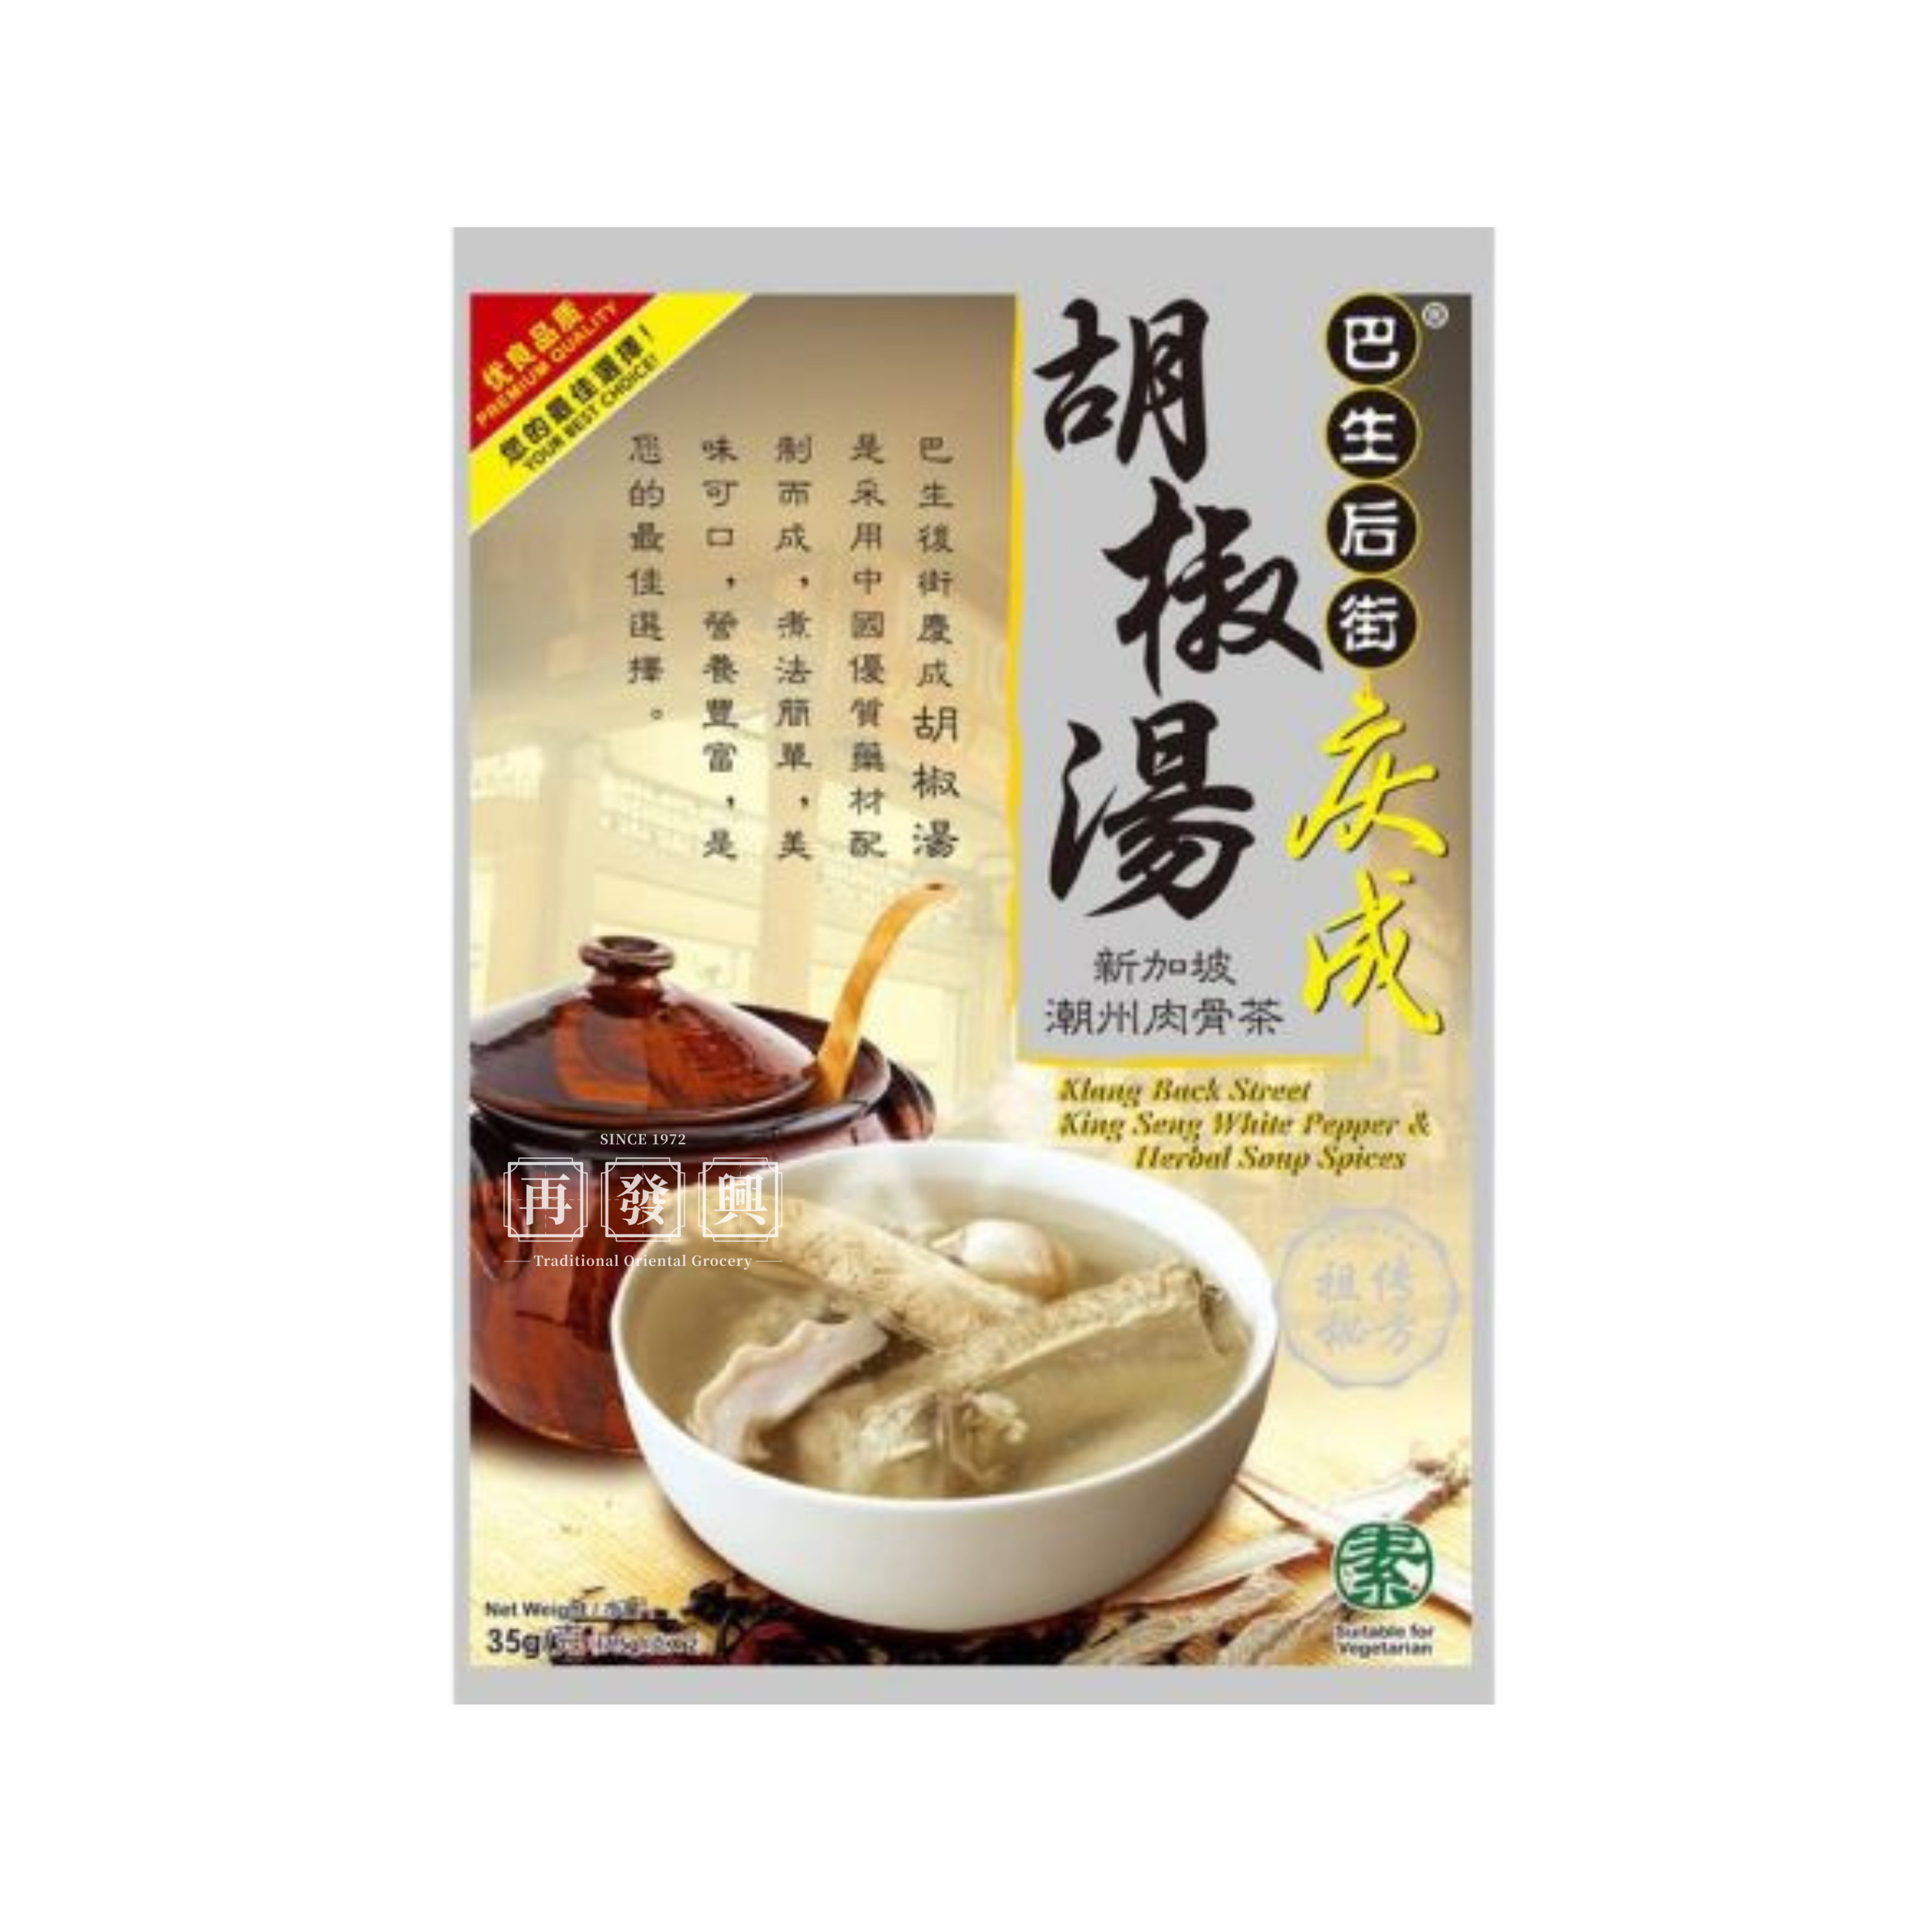 King Seng Klang Backstreet White Pepper & Herbal Soup Spices 35g